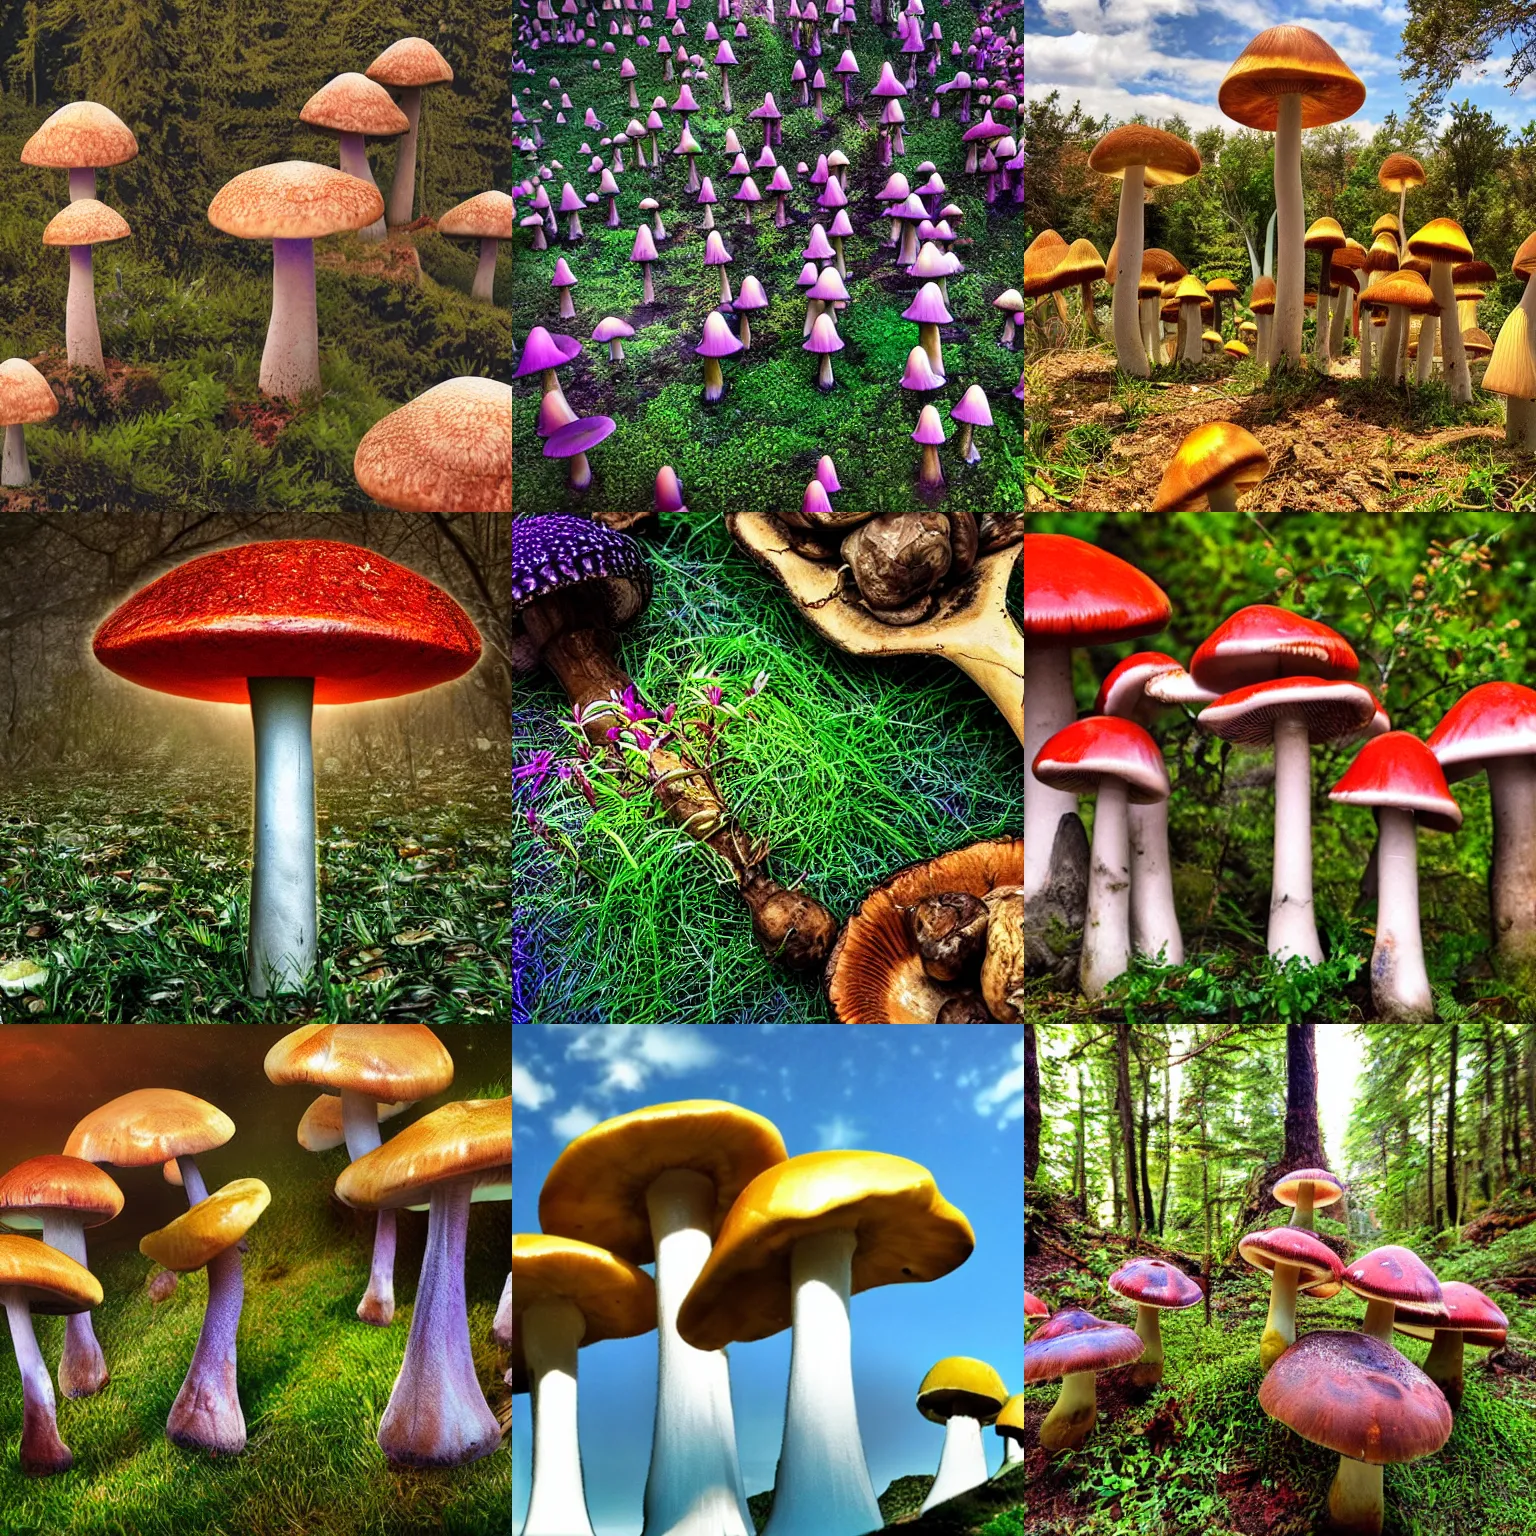 Prompt: Acceleraytar is the land of psylocybin mushrooms